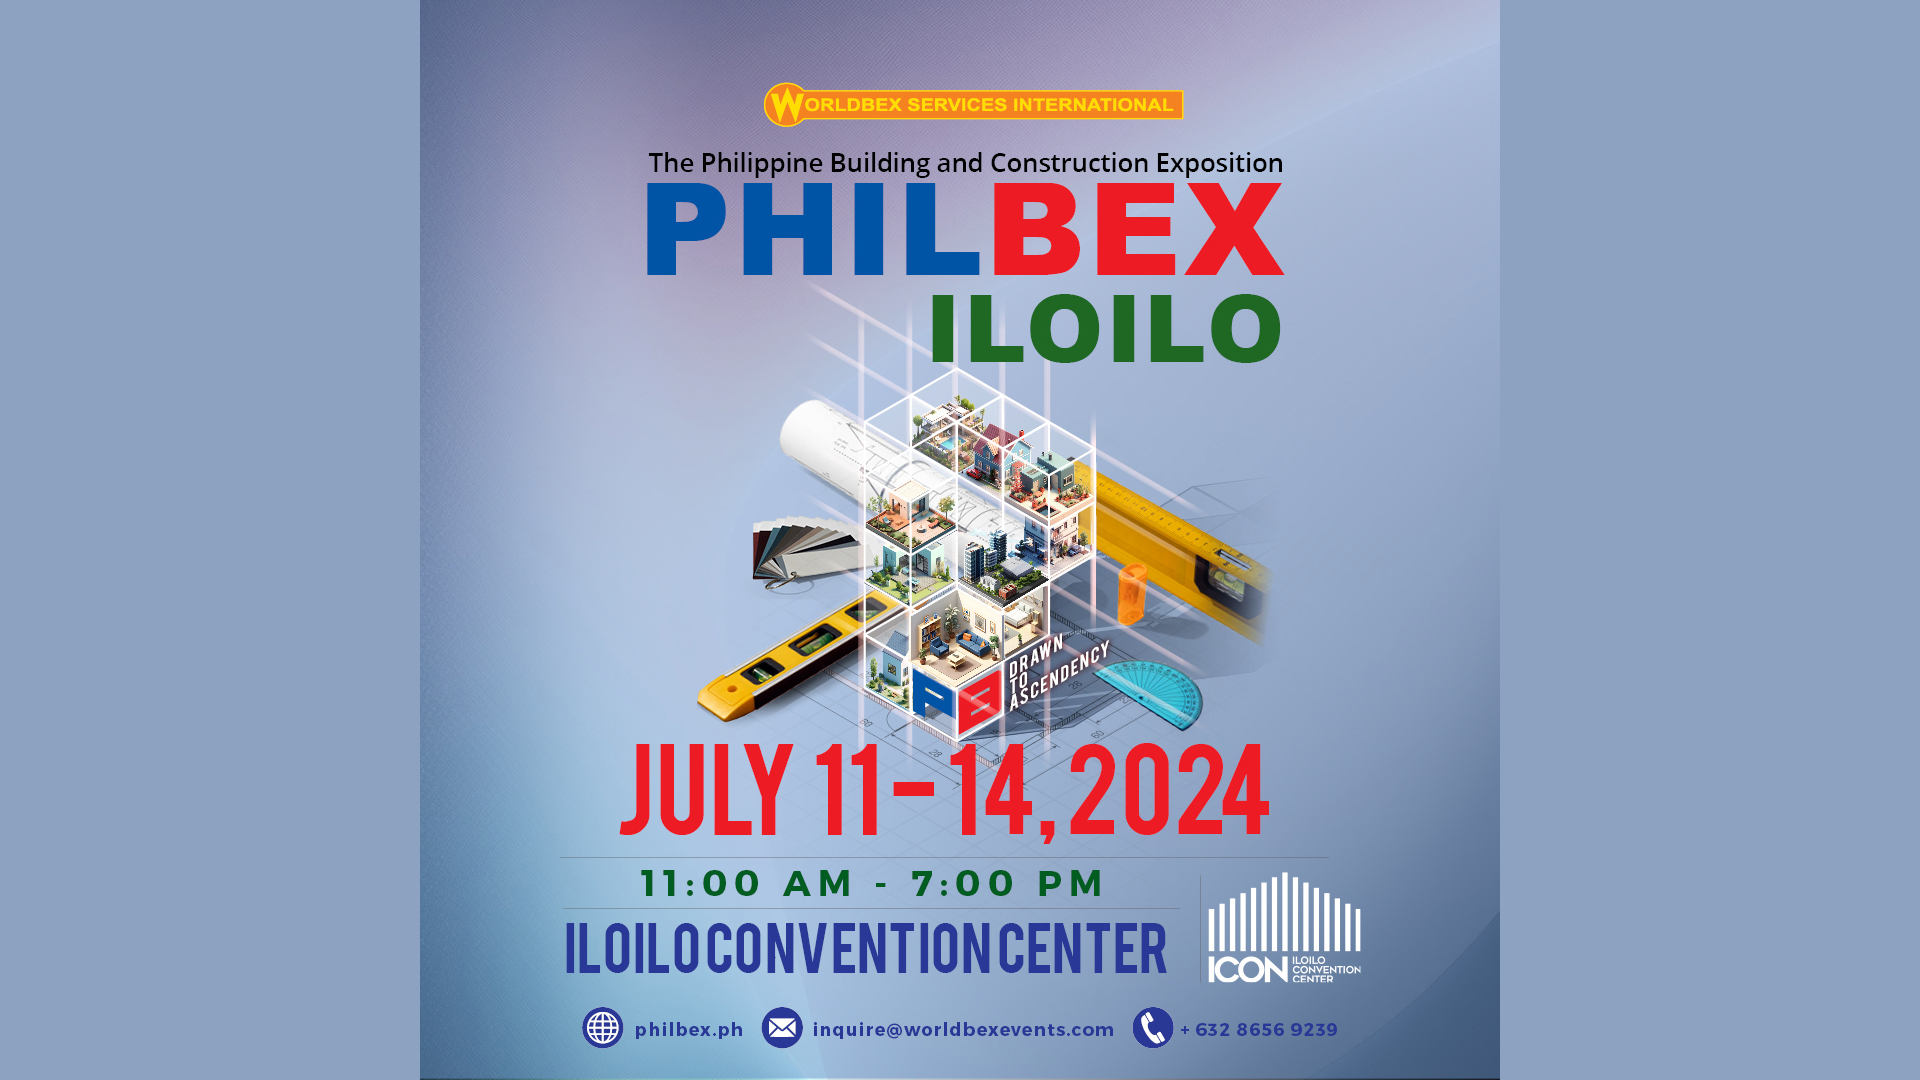 PHILBEX ILOILO 2024 unveils the future of Building and Design